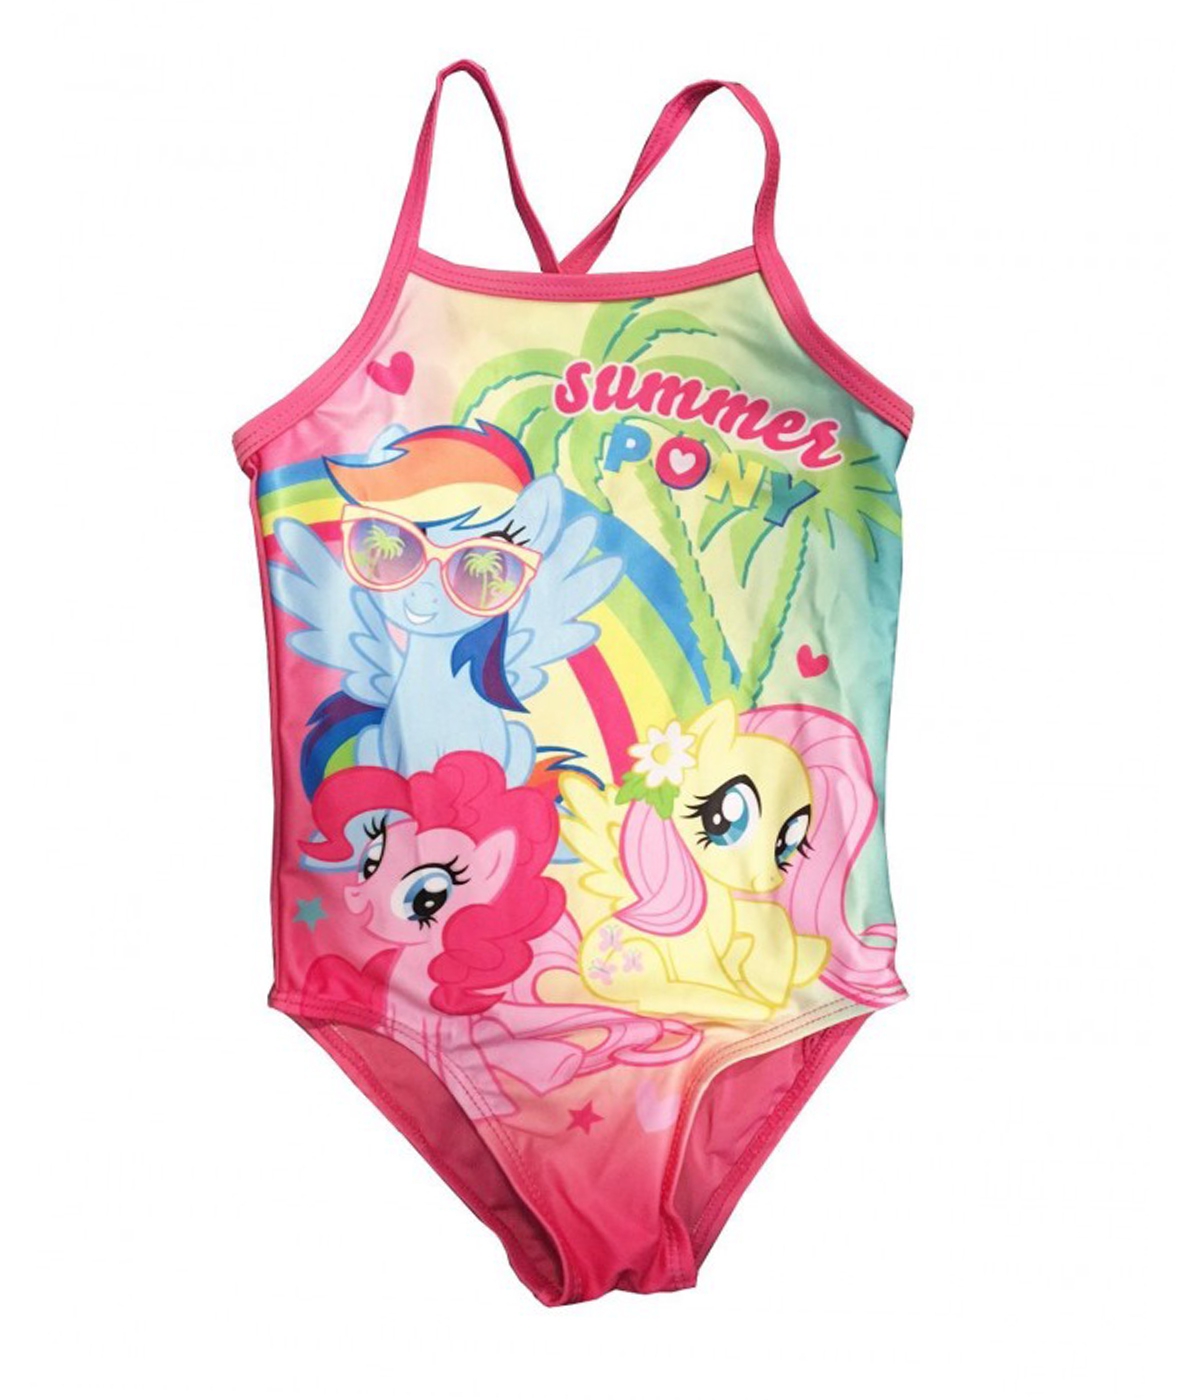 My Little Pony 'Summer' Girls 18 Months - 5 Years Swimwear Swimsuit